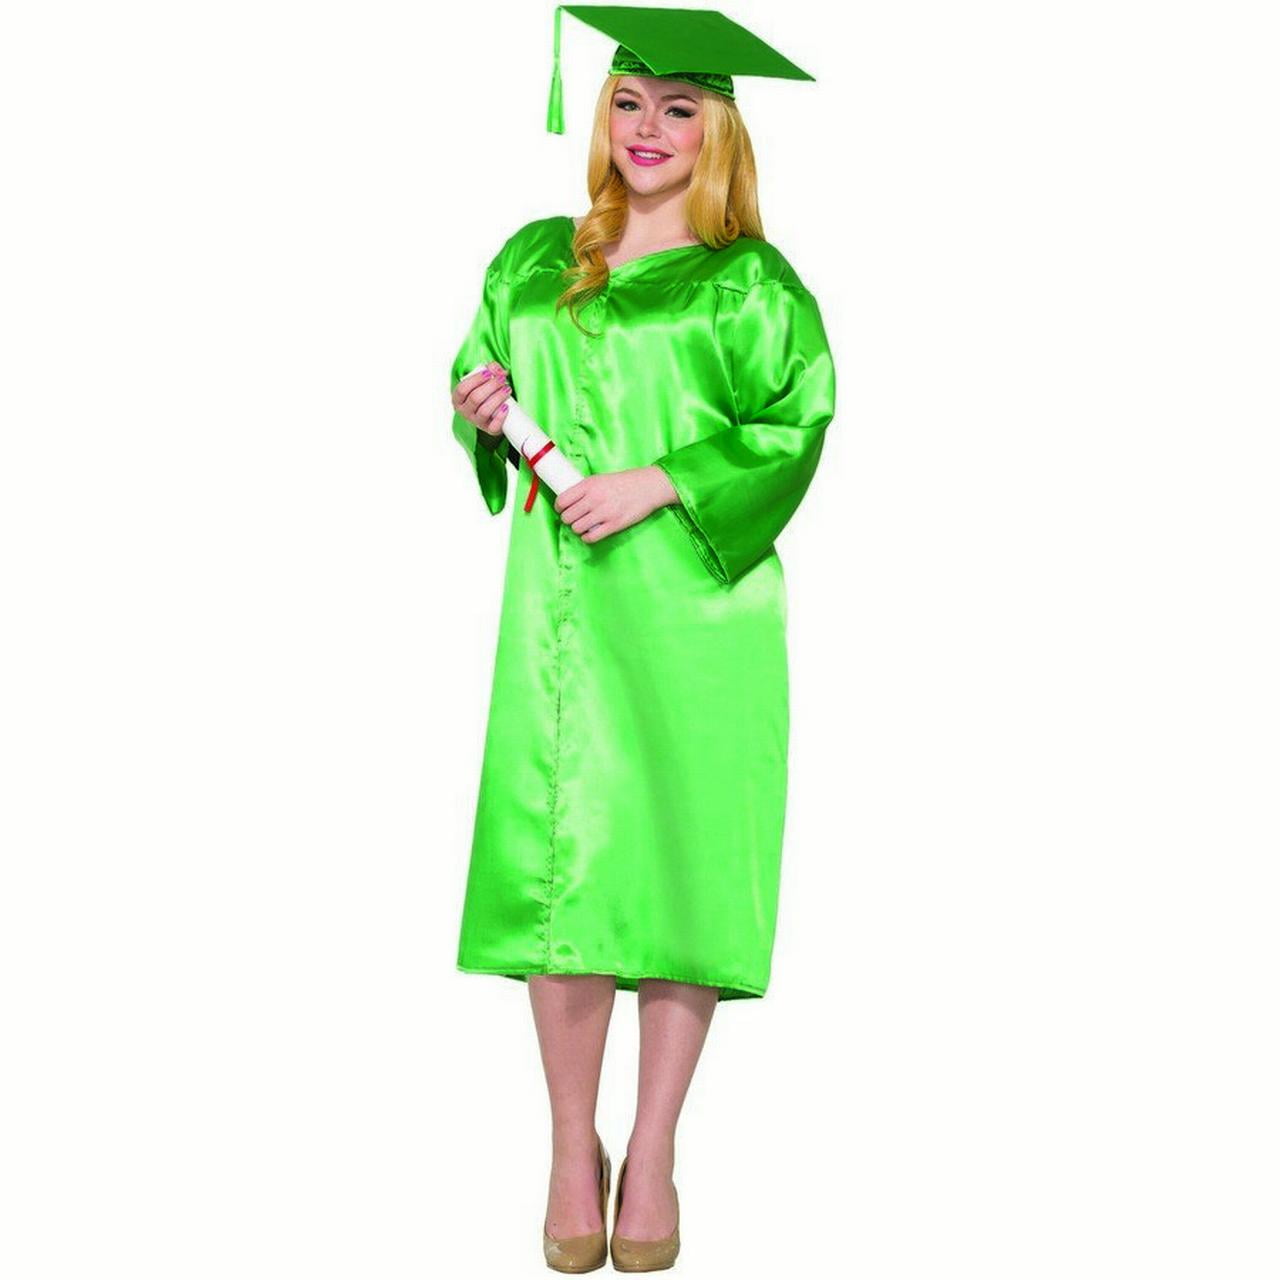 Shiny High School Graduation Cap and Gown Set - 12 Colors Available -  GraduatePro